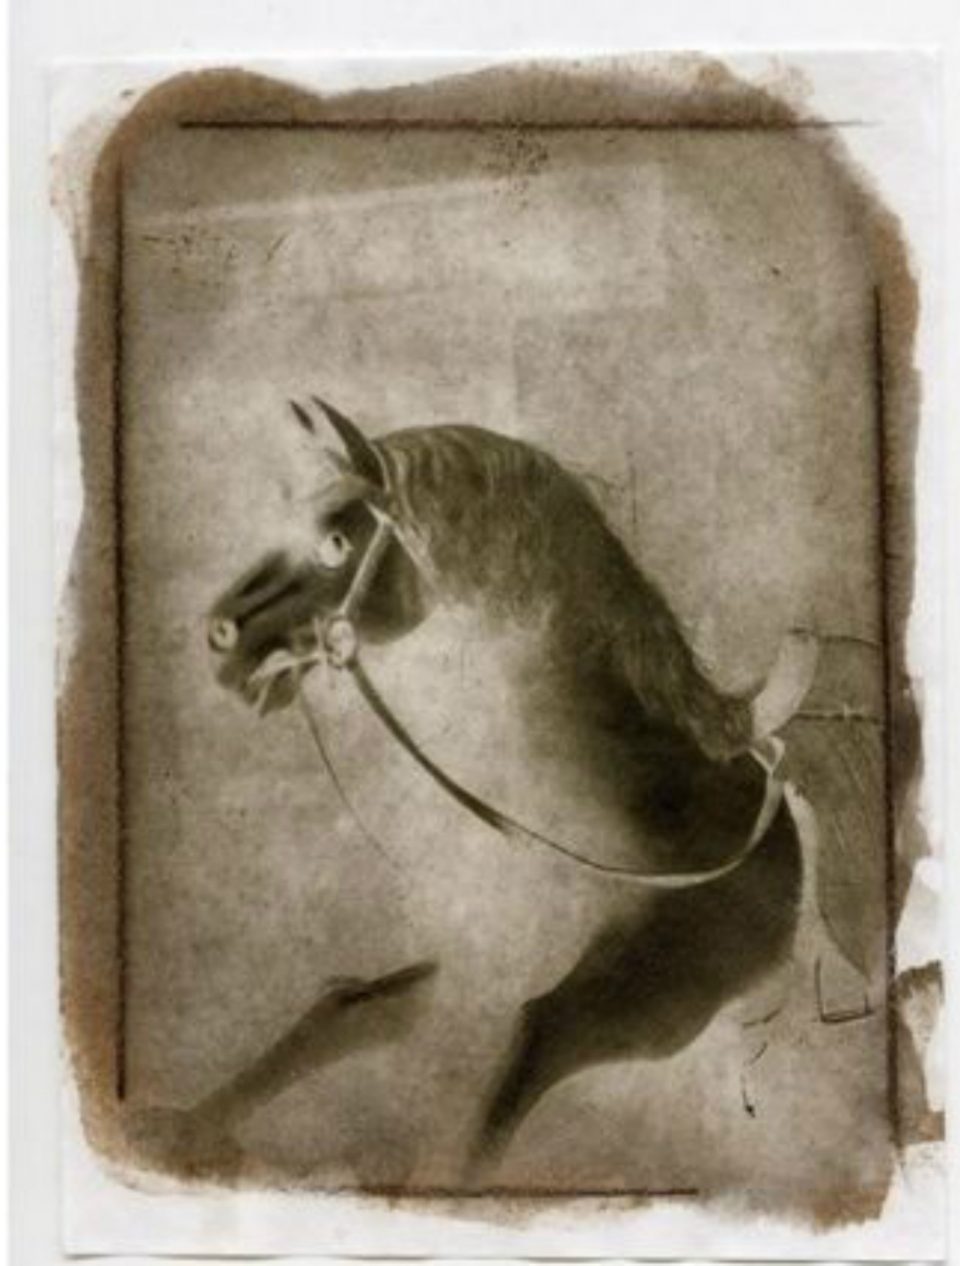 Rocking horse Firefoot, calotypes, ©Claudio Santambrogio
